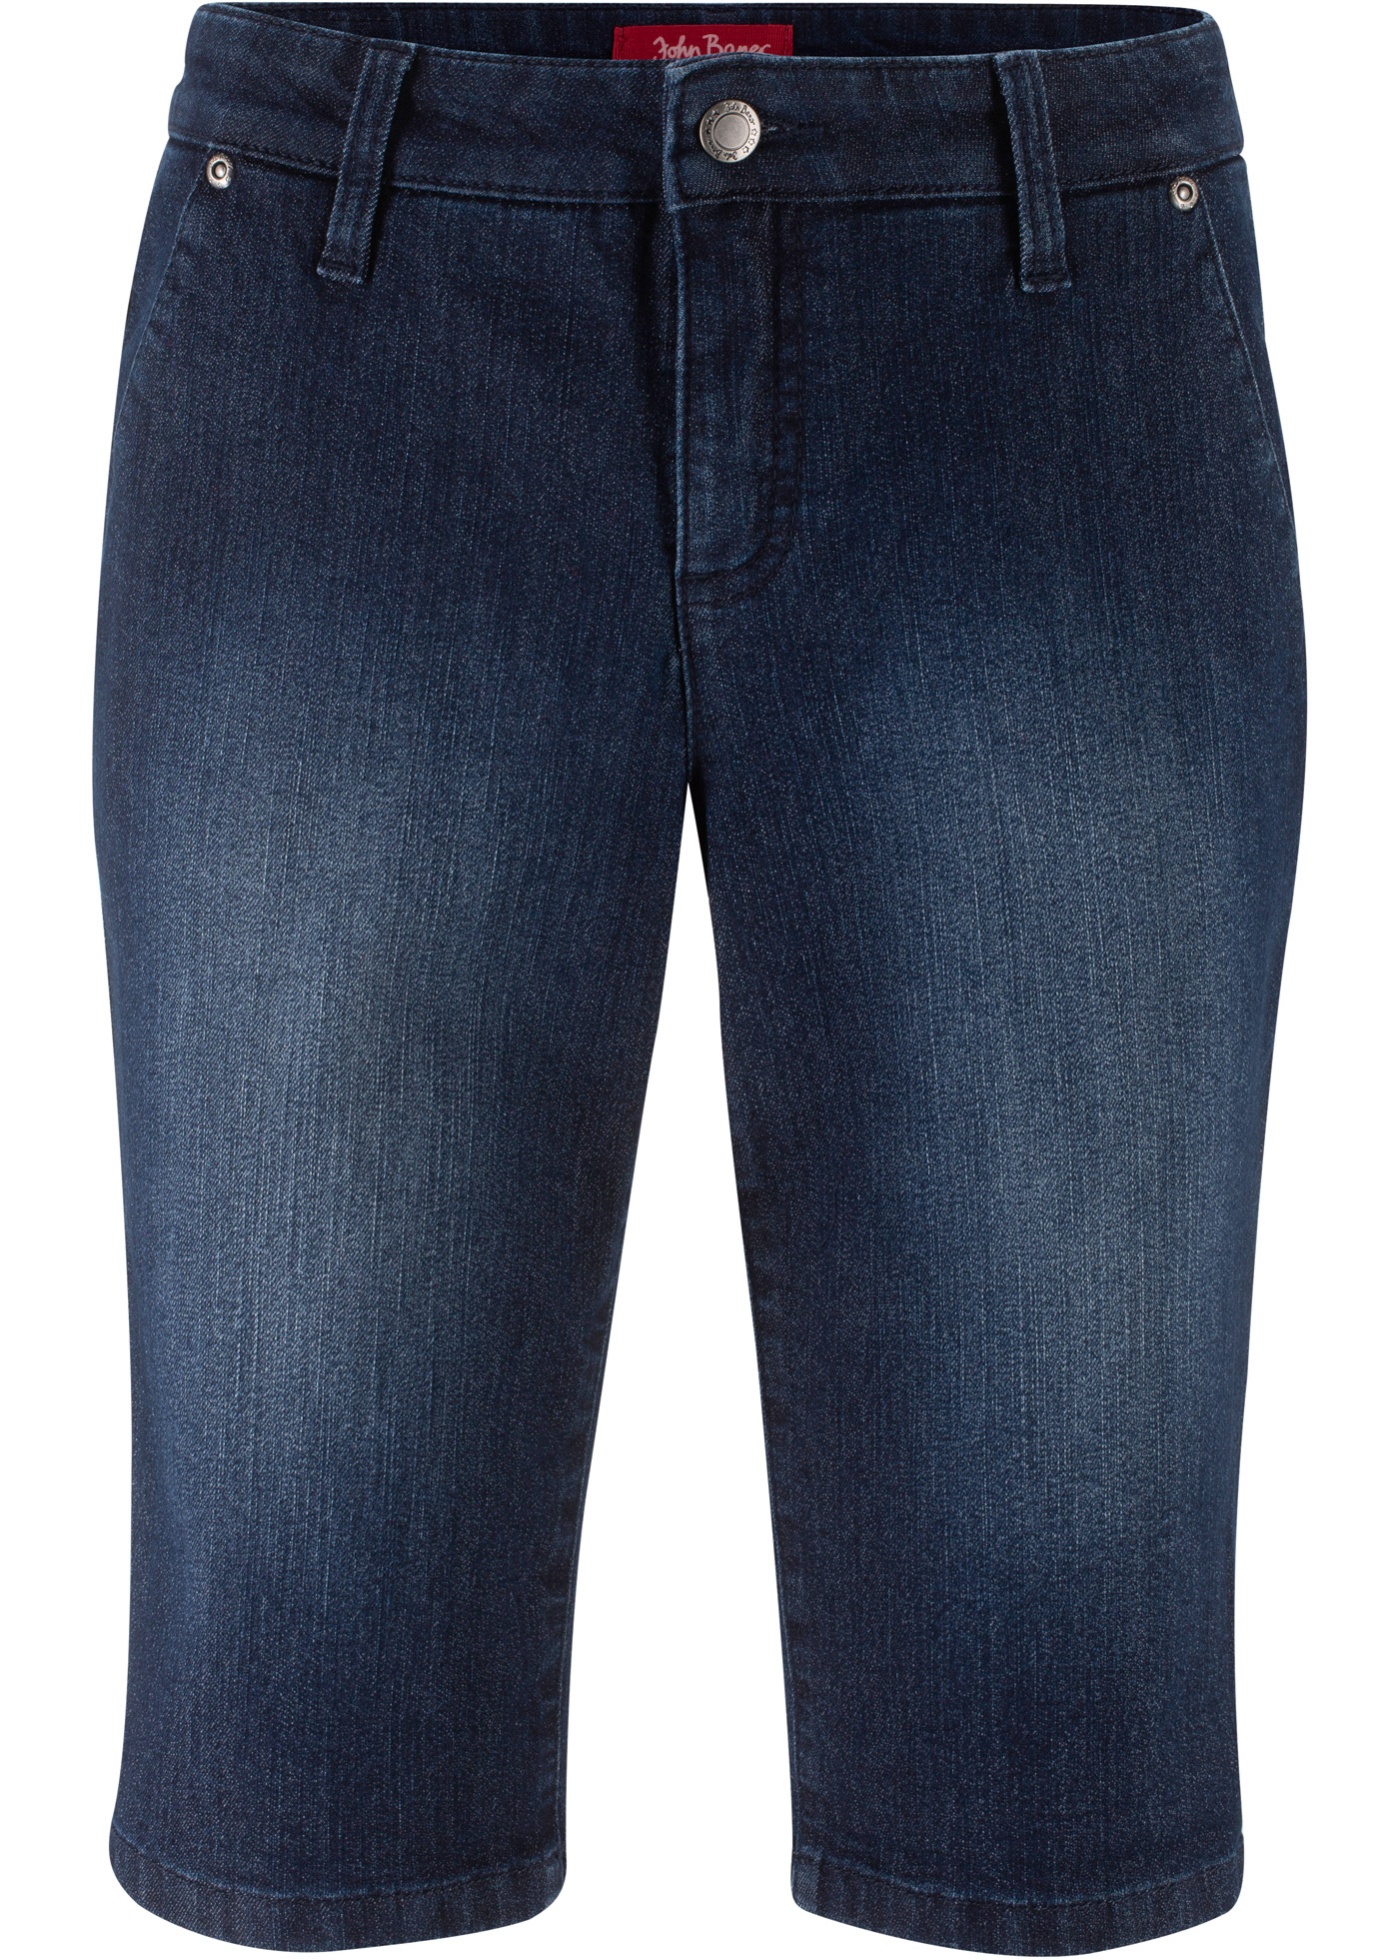 Komfort Stretch Jeans-Bermuda